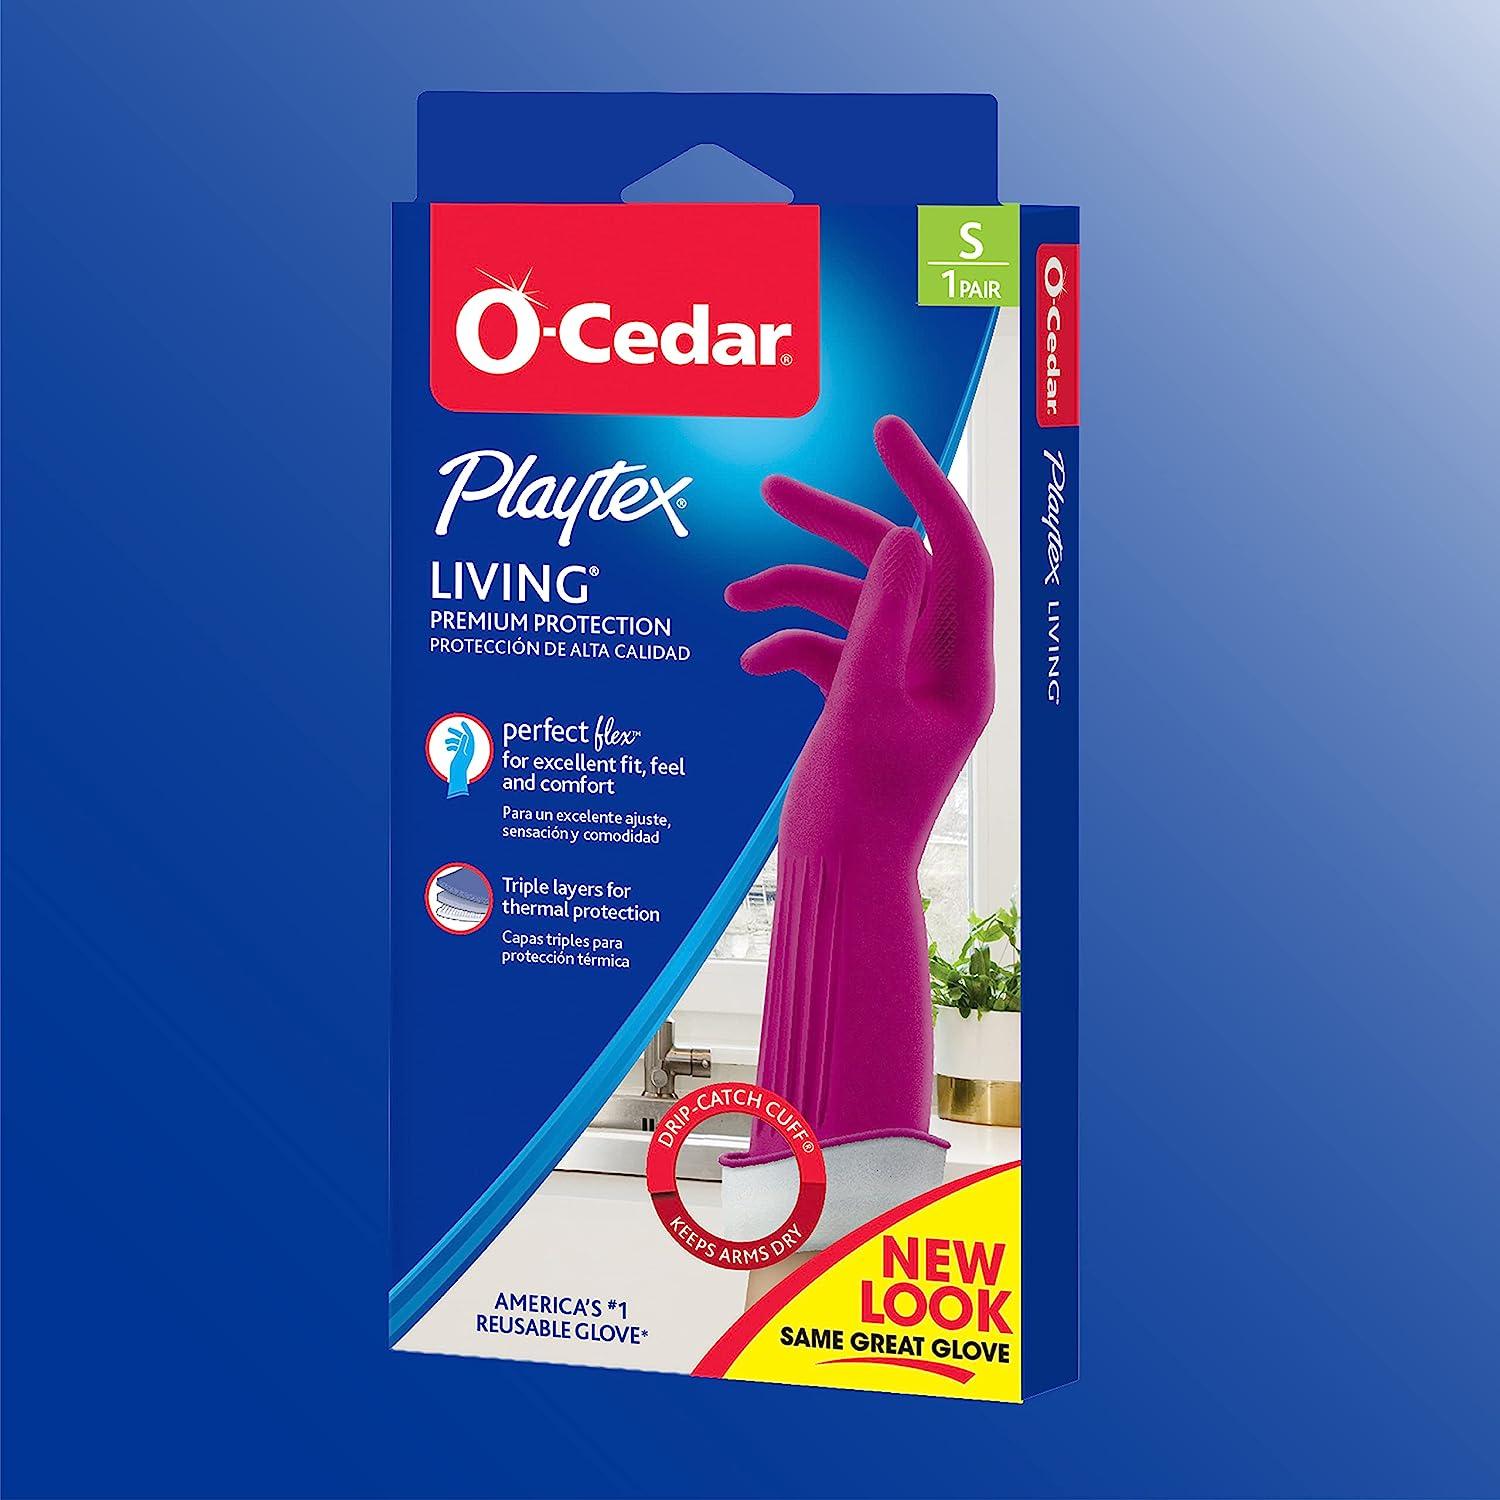 O-Cedar Playtex Handsaver Everyday Protection Gloves, L, 1 pair